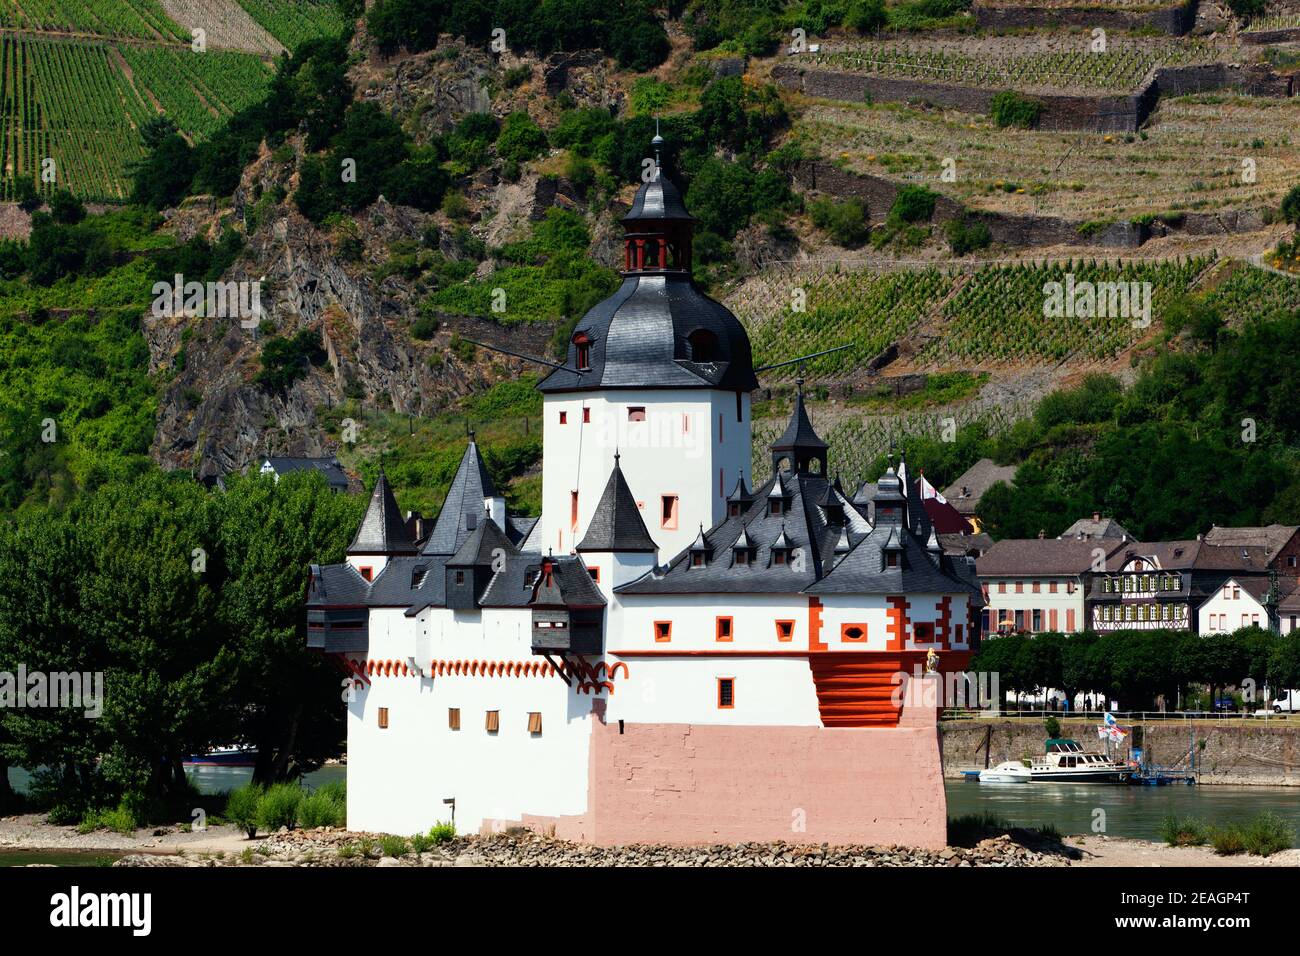 Burg Pfalzgrafenstein, a toll castle on the Rhine (Rhein) River. Stock Photo